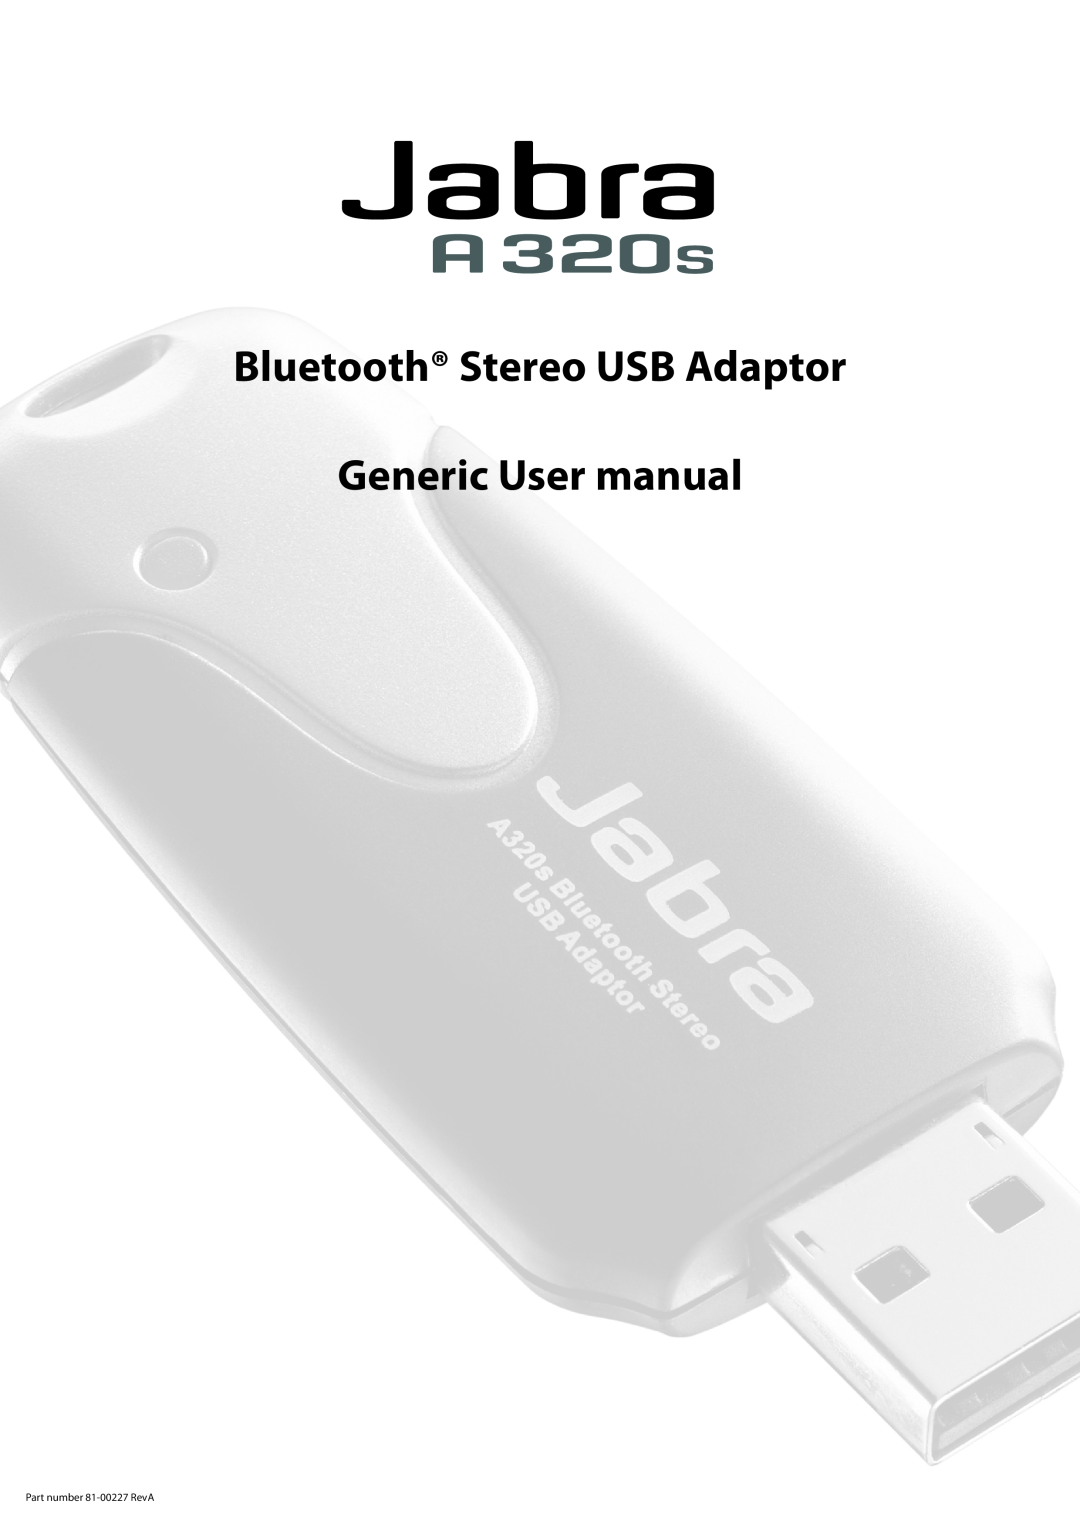 Jabra A320s user manual Bluetooth Stereo USB Adaptor, Generic User manual, Part number 81-00227 RevA 